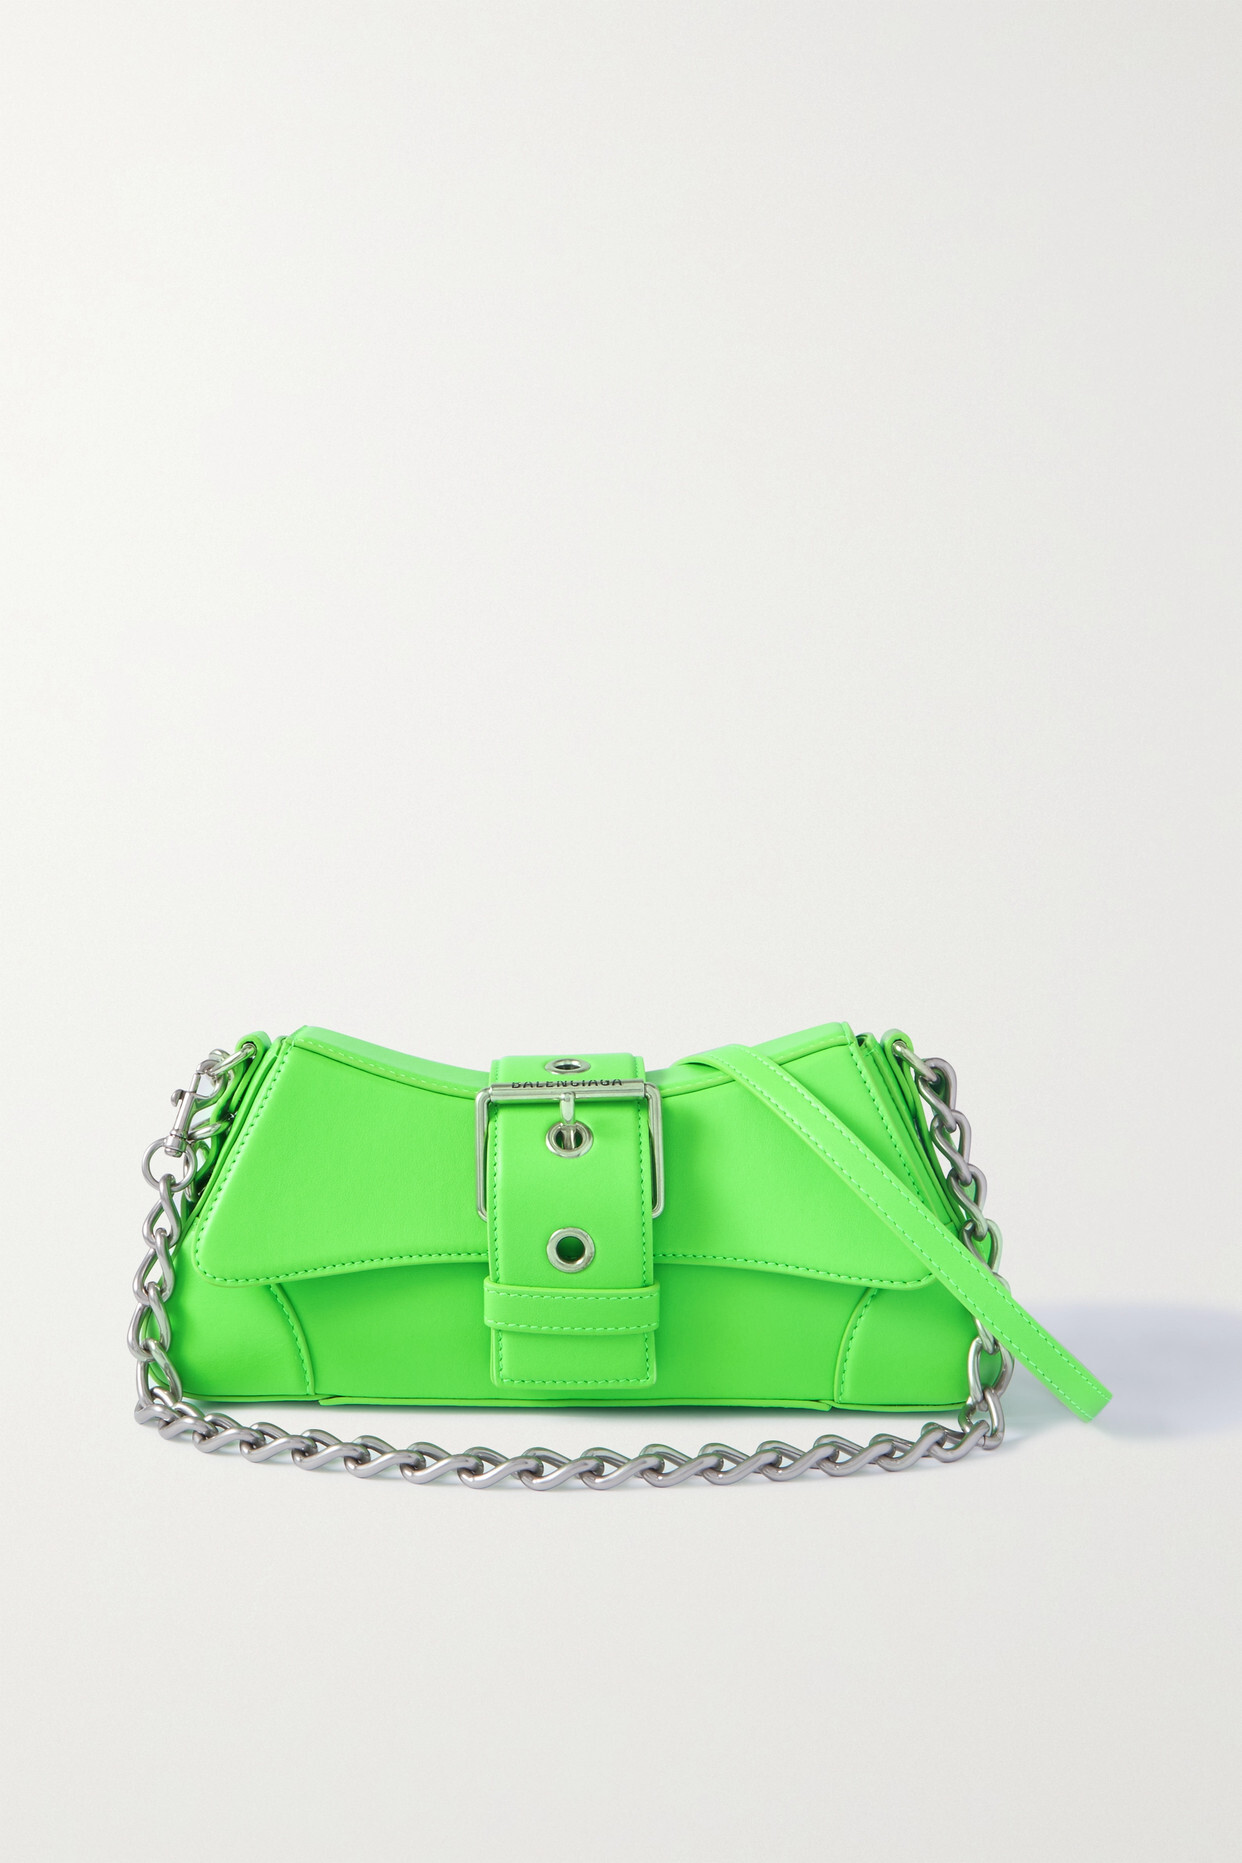 Balenciaga - Lindsay Small Buckled Leather Shoulder Bag - Green